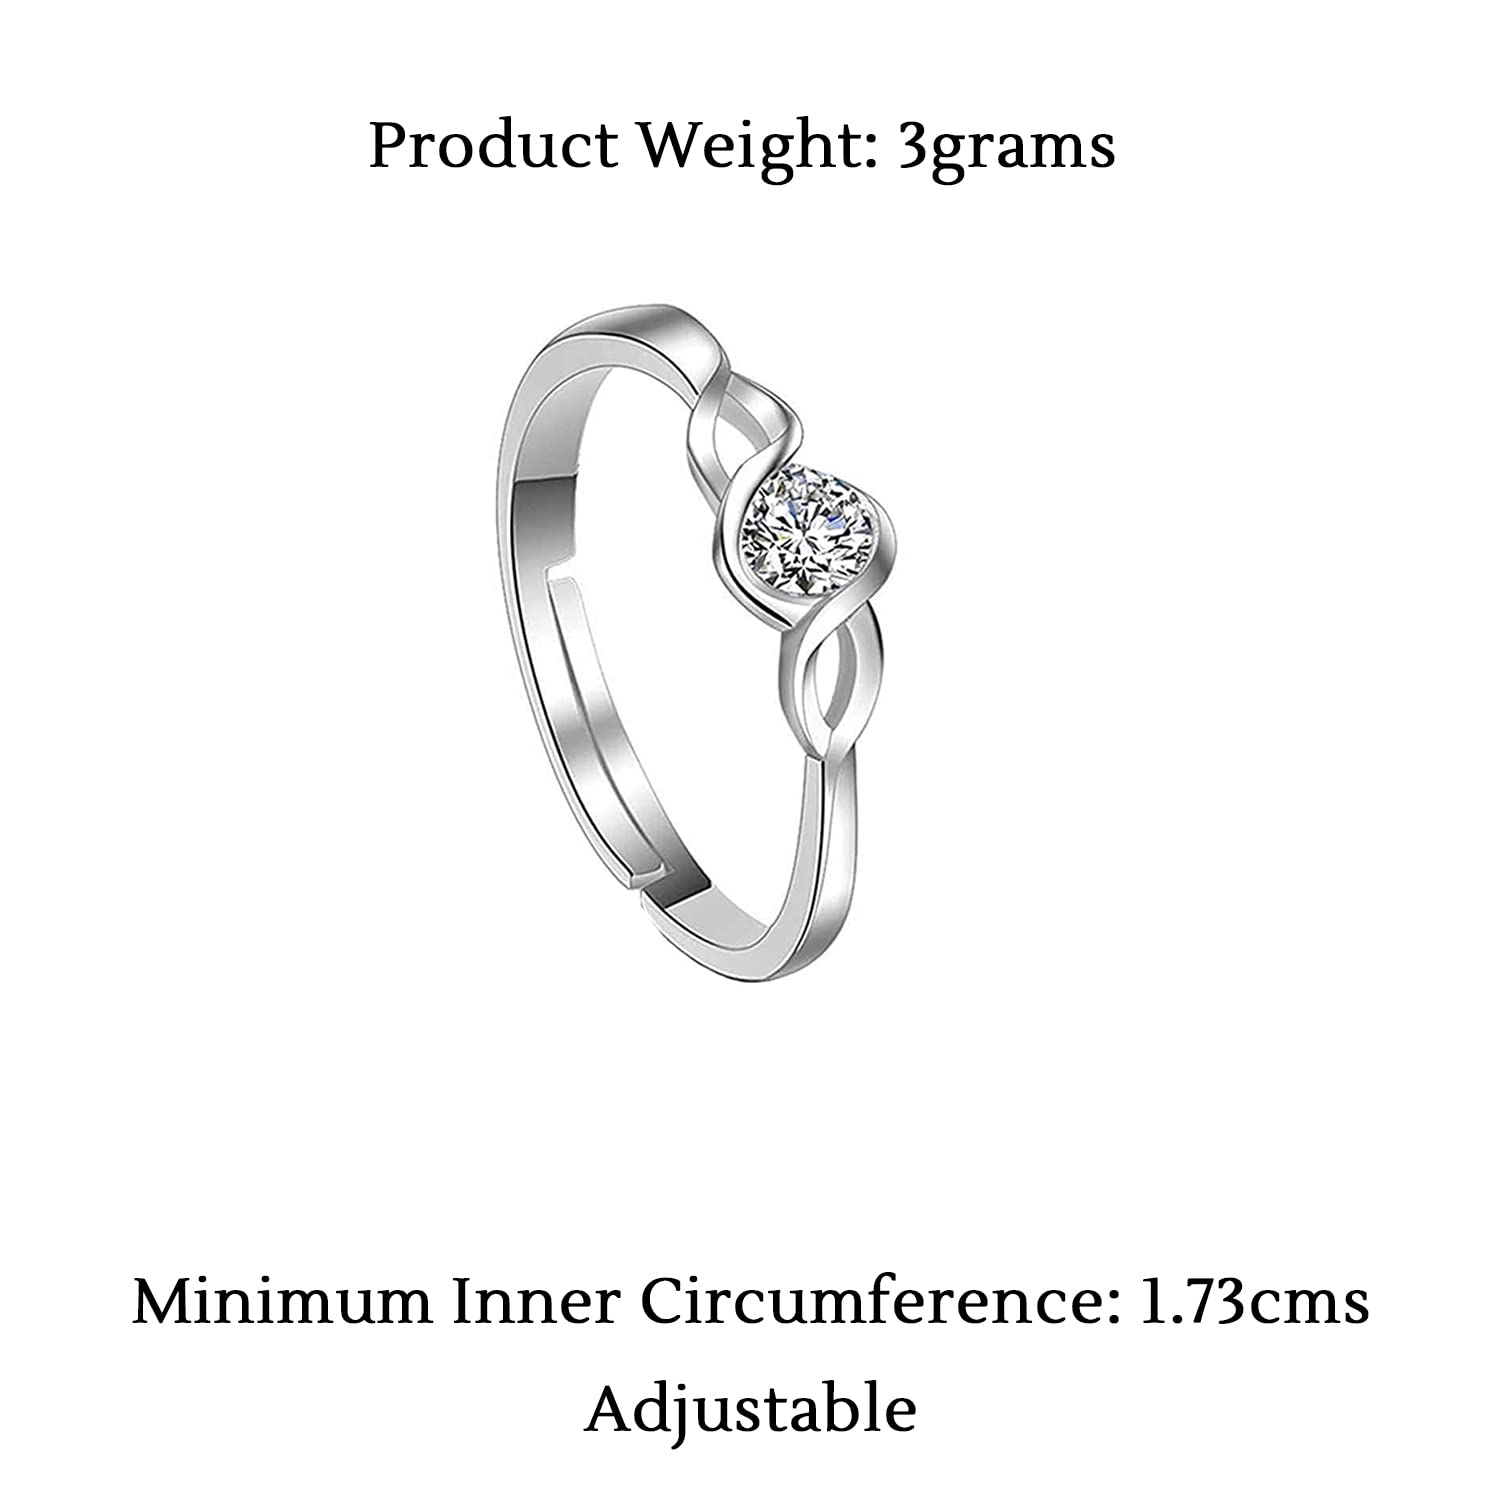 Yellow Chimes Elegant Crsytal Adjustable Silver Ring for Women (YCFJRG-314ENG-SL)